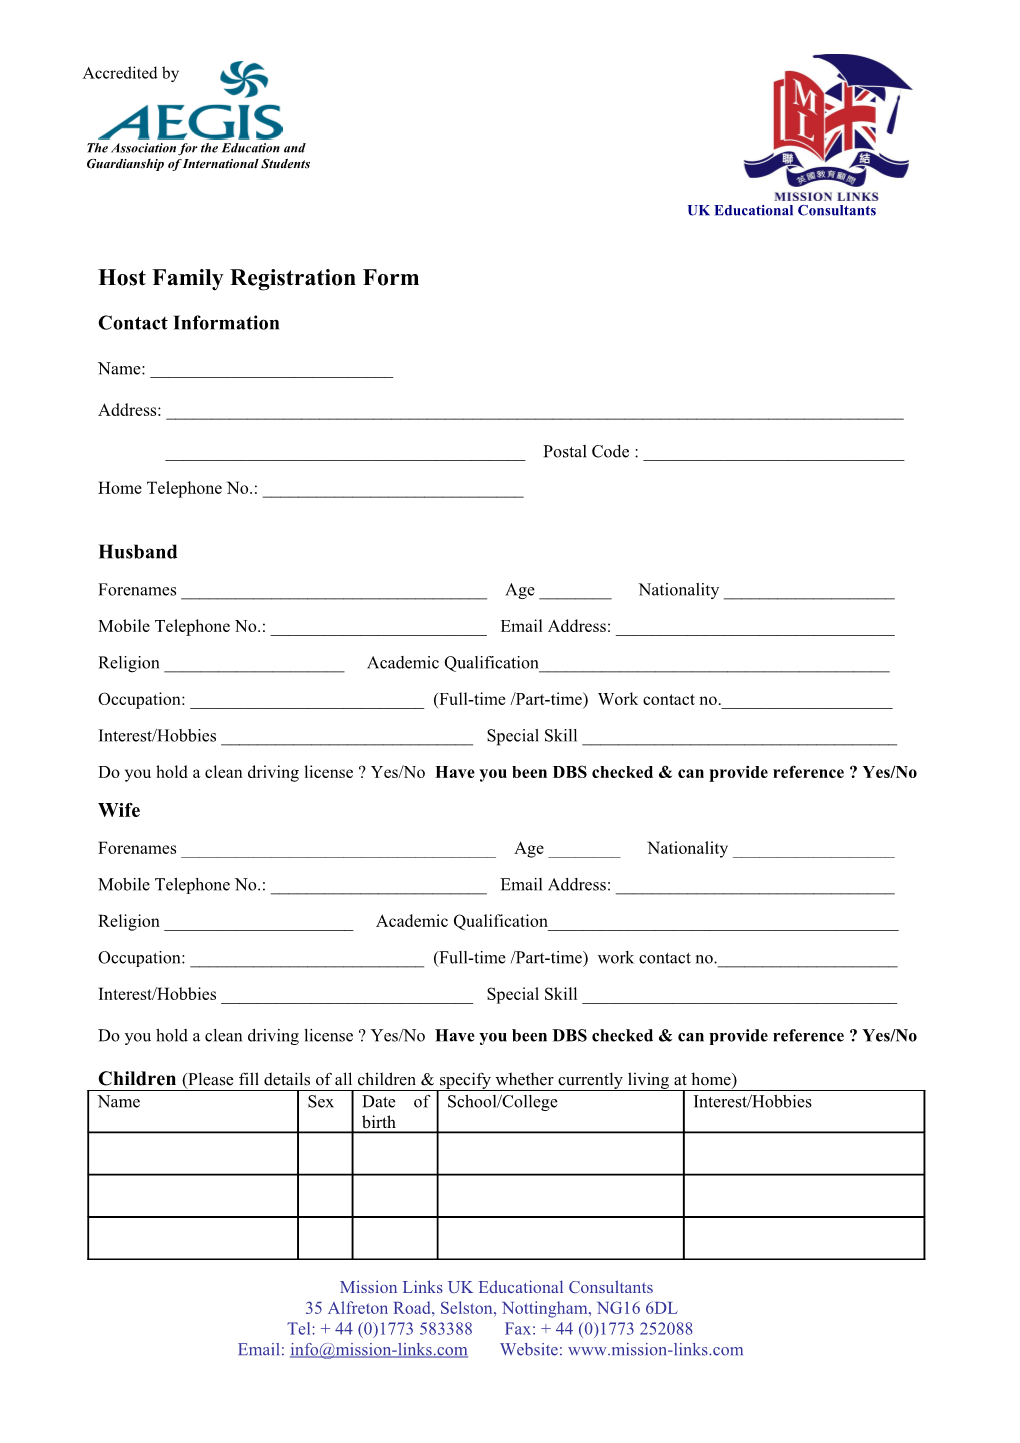 Host Family Registration Form